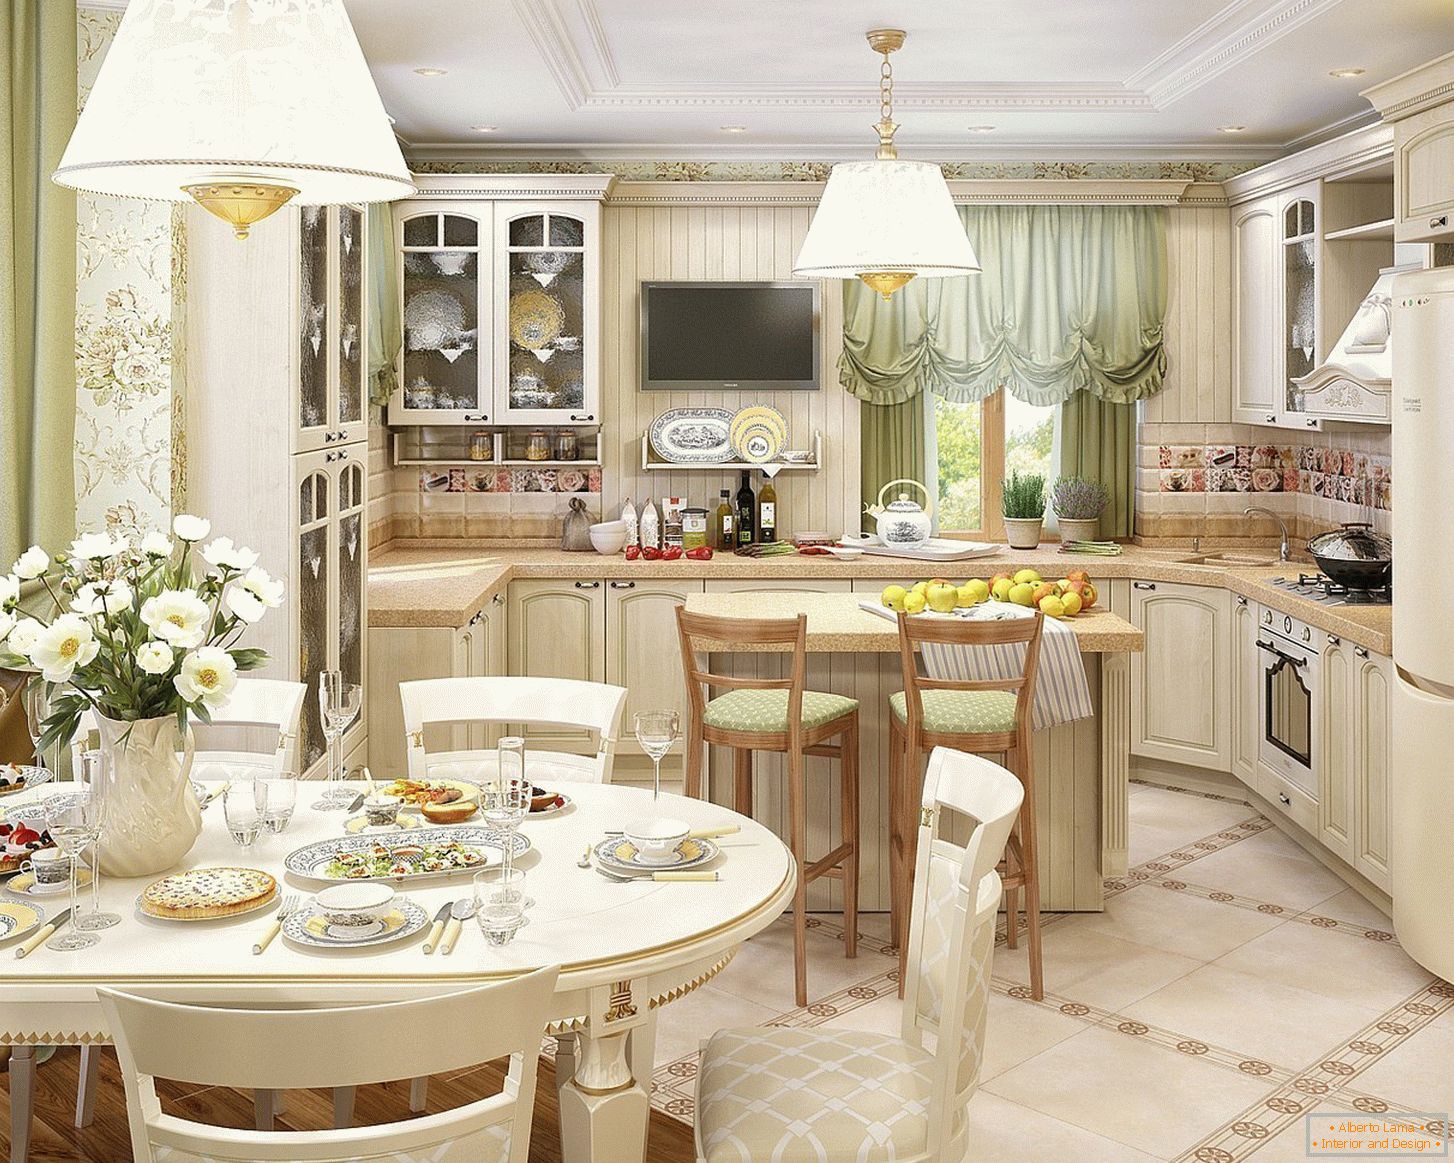 Cucina interna in stile provenzale